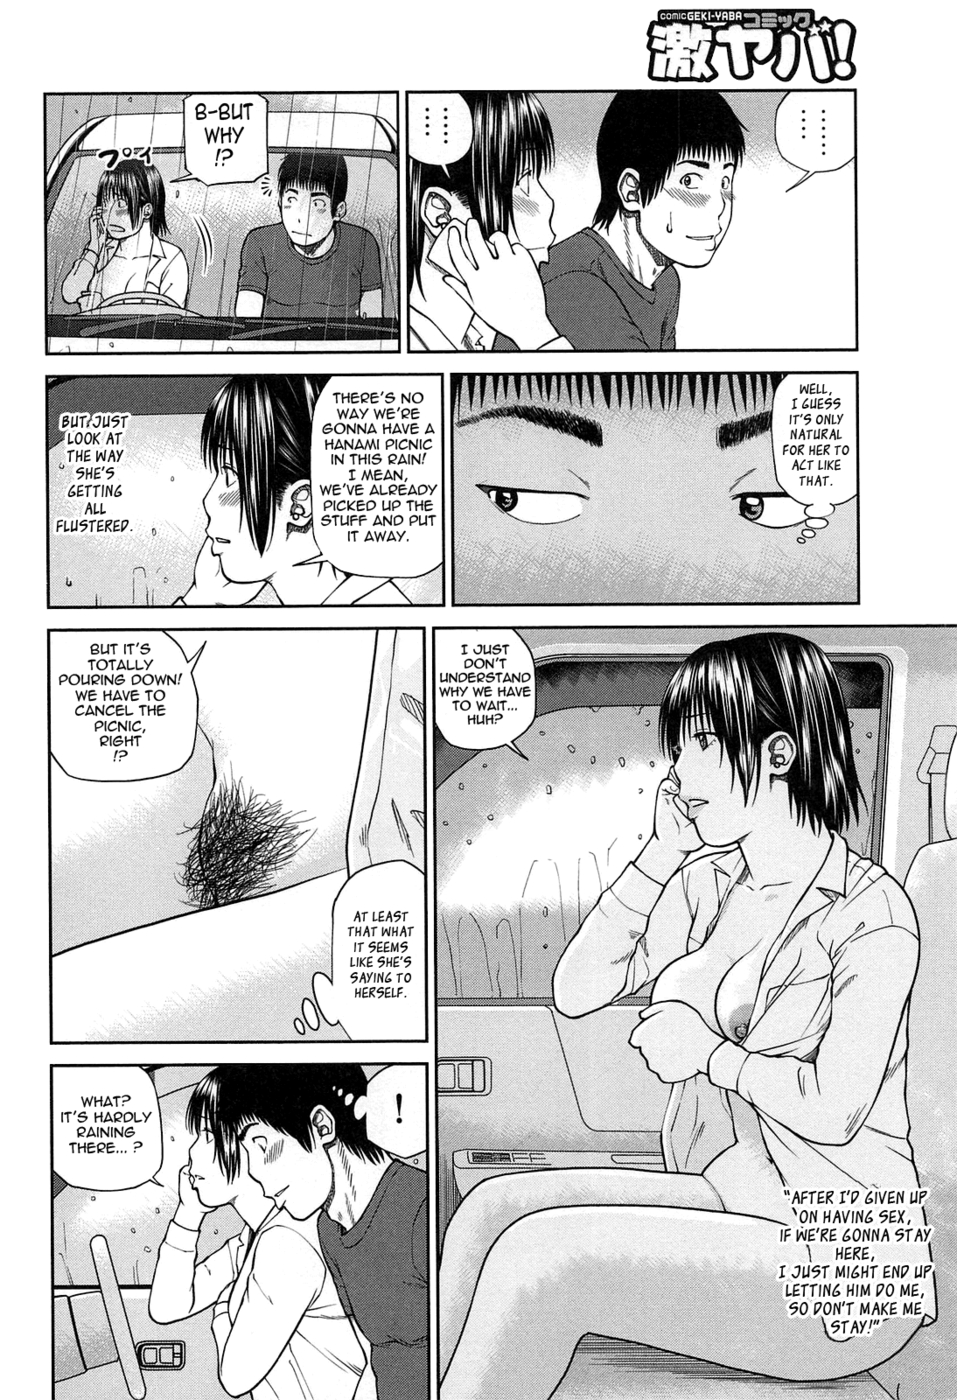 Hentai Manga Comic-35 Year Old Ripe Wife-Chapter 2-Wet Wife (Second Half)-2